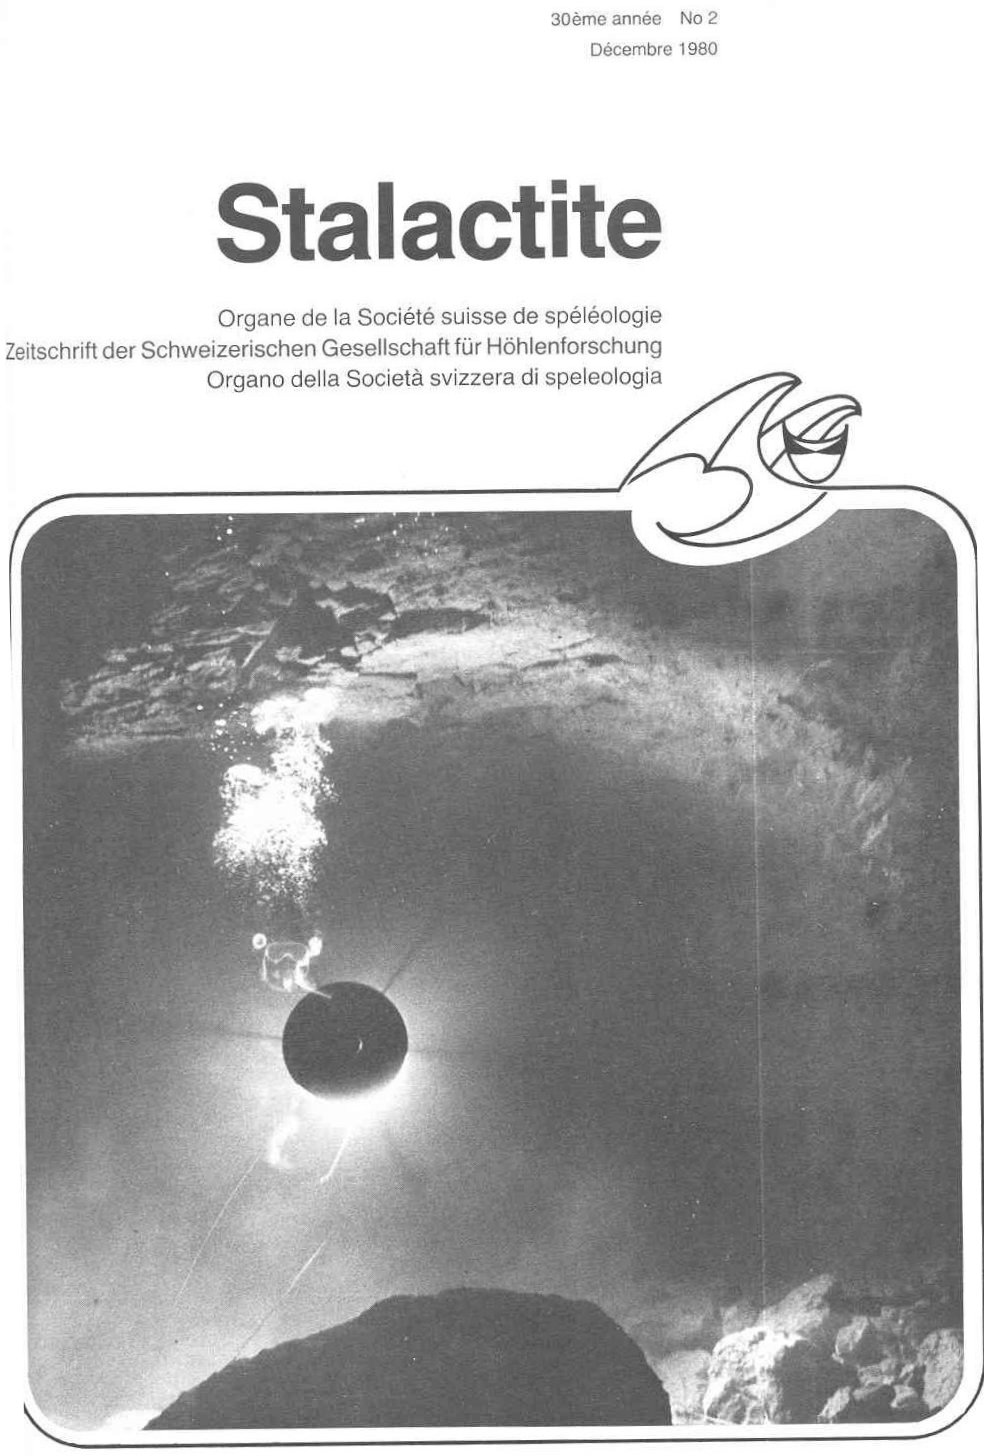 copertina anno 1980 n°2.jpg